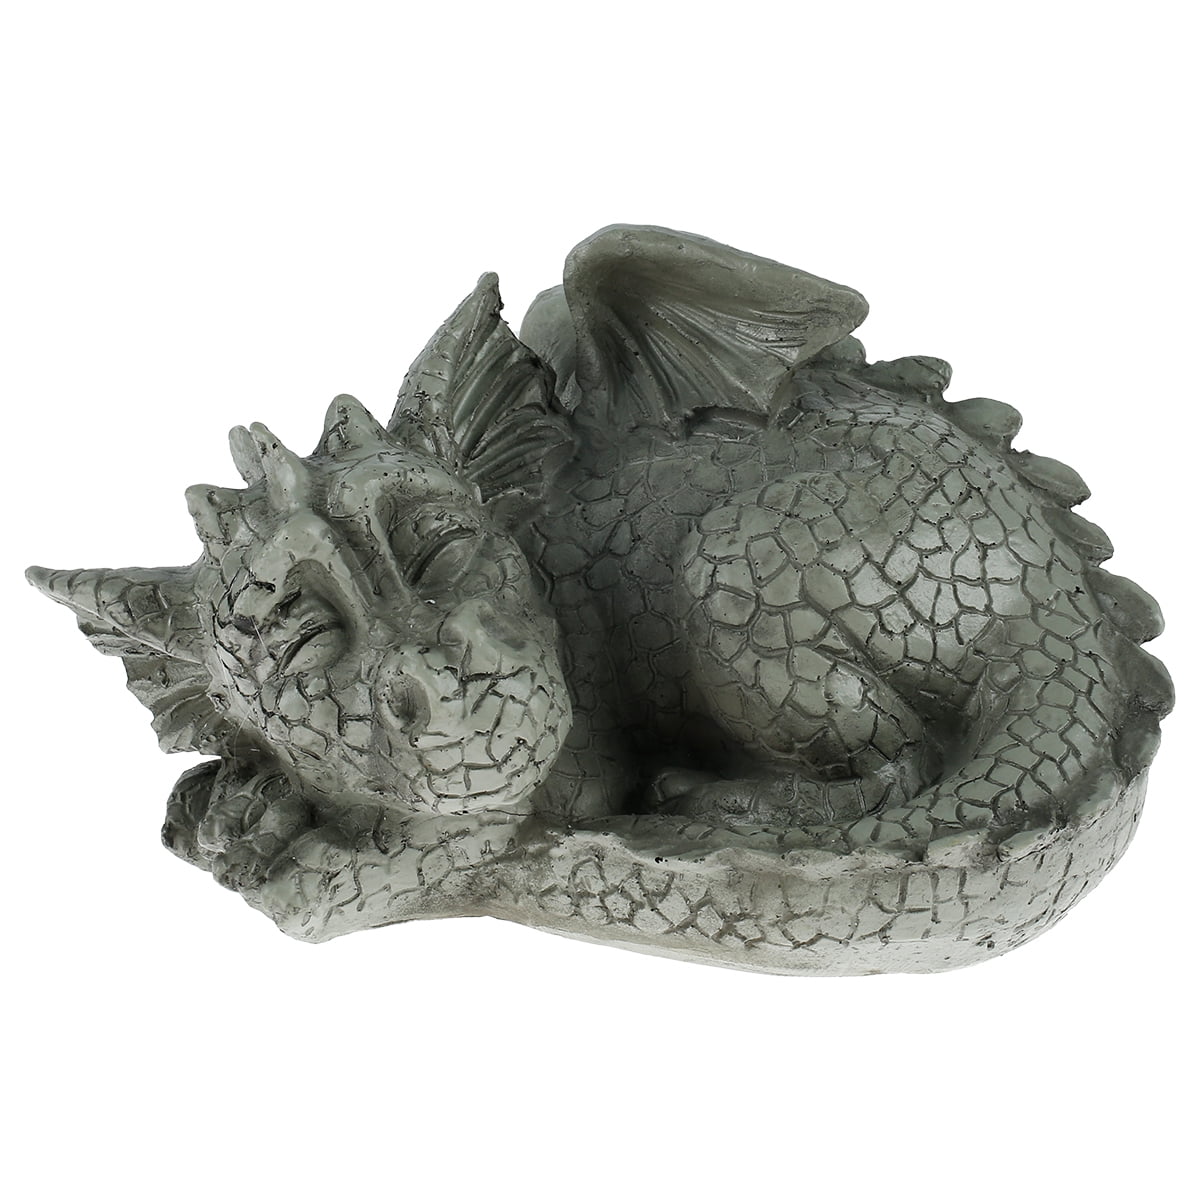 Sleeping Baby Dragon statue 